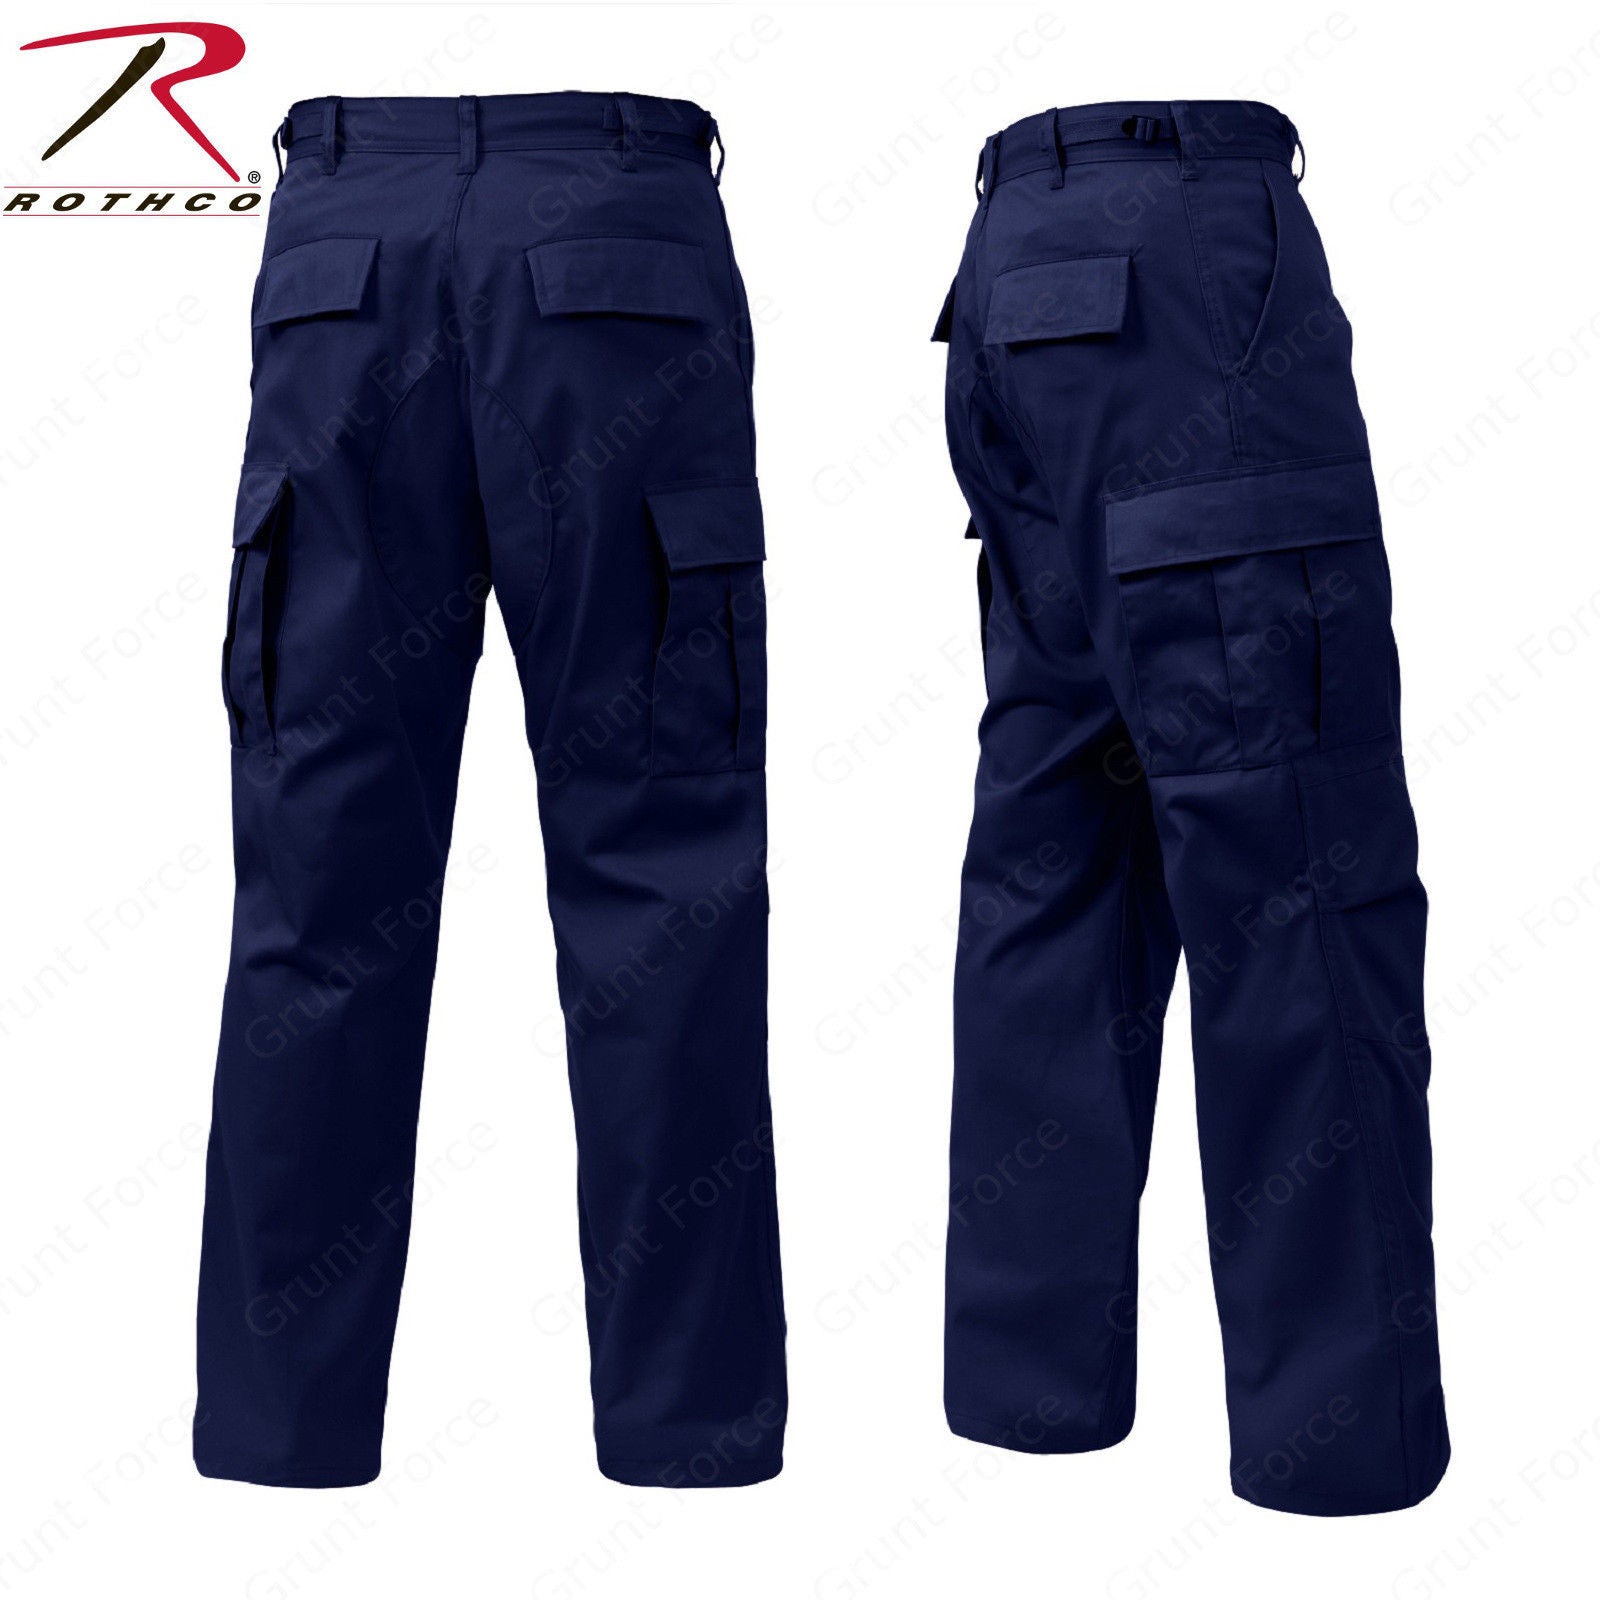 Shop Blauer Men's 6-Pocket Wool Blend Uniform Pants